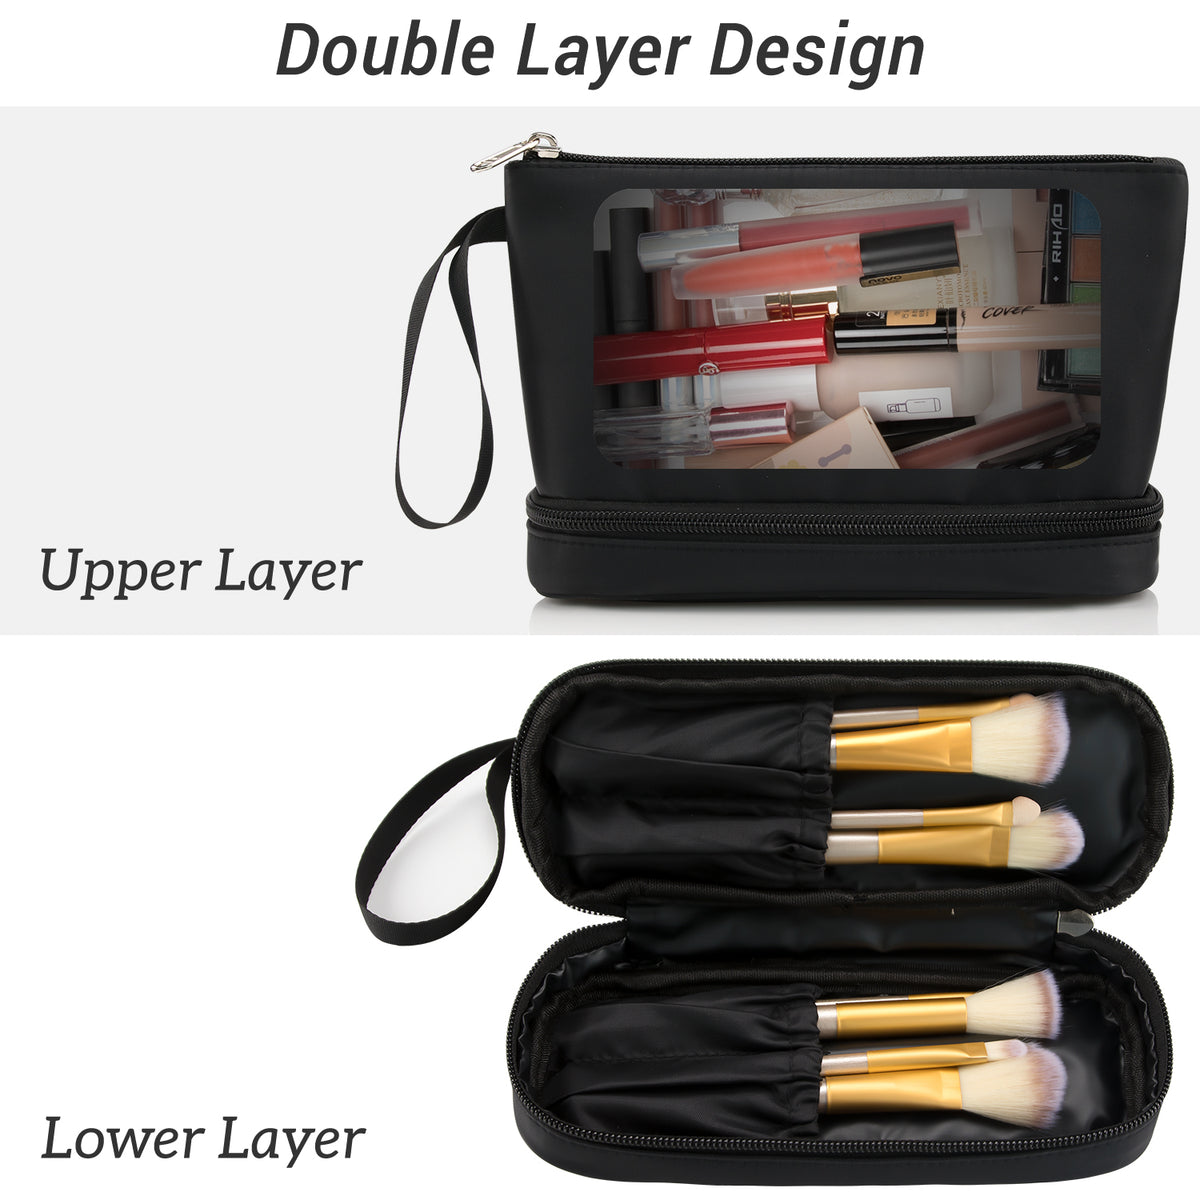 Designer Vanity Cases That Double As Top Handle Bags